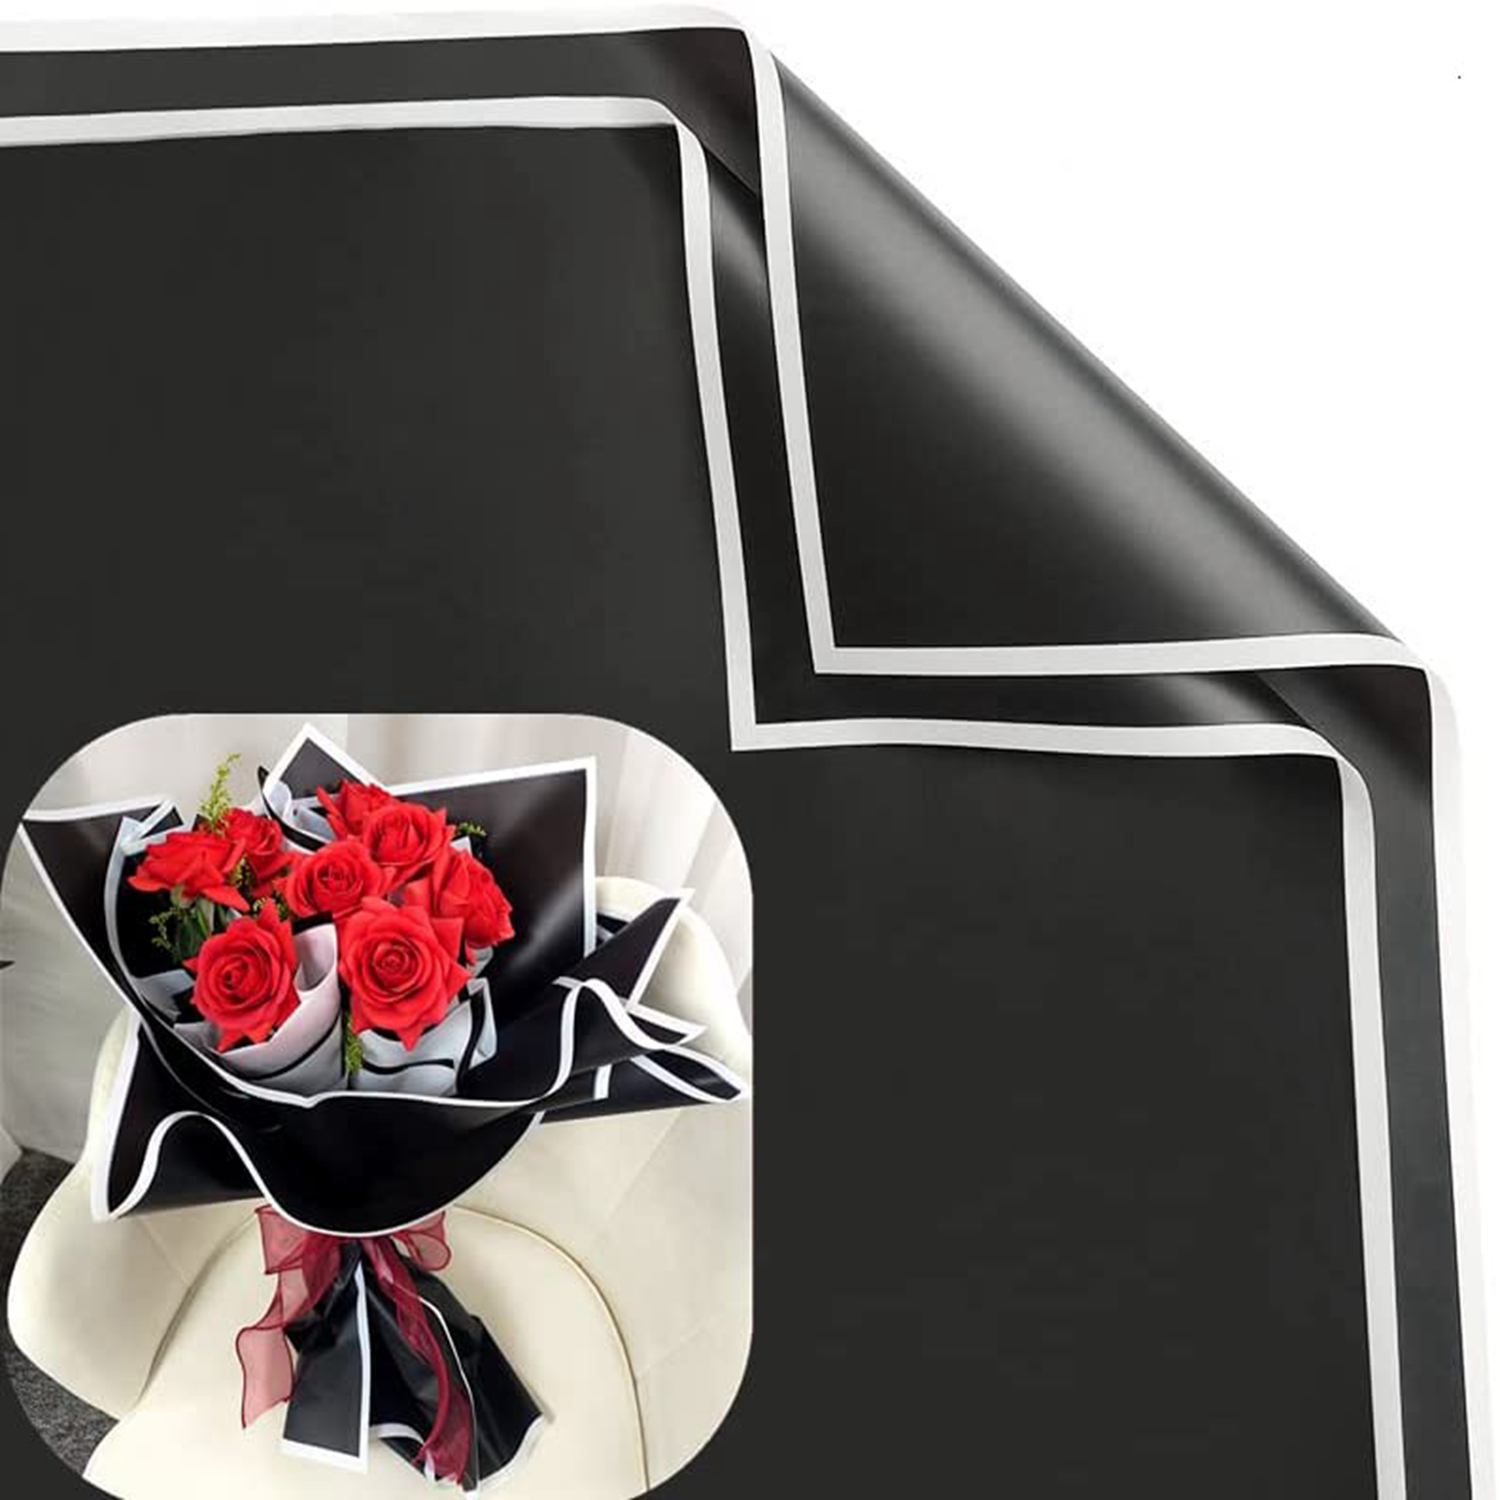 Papel de regalo de flores de estilo coreano, envoltura de ramo floral,  embalaje de regalo, suministros de floristería, 20 unidades (Melocotón  claro)